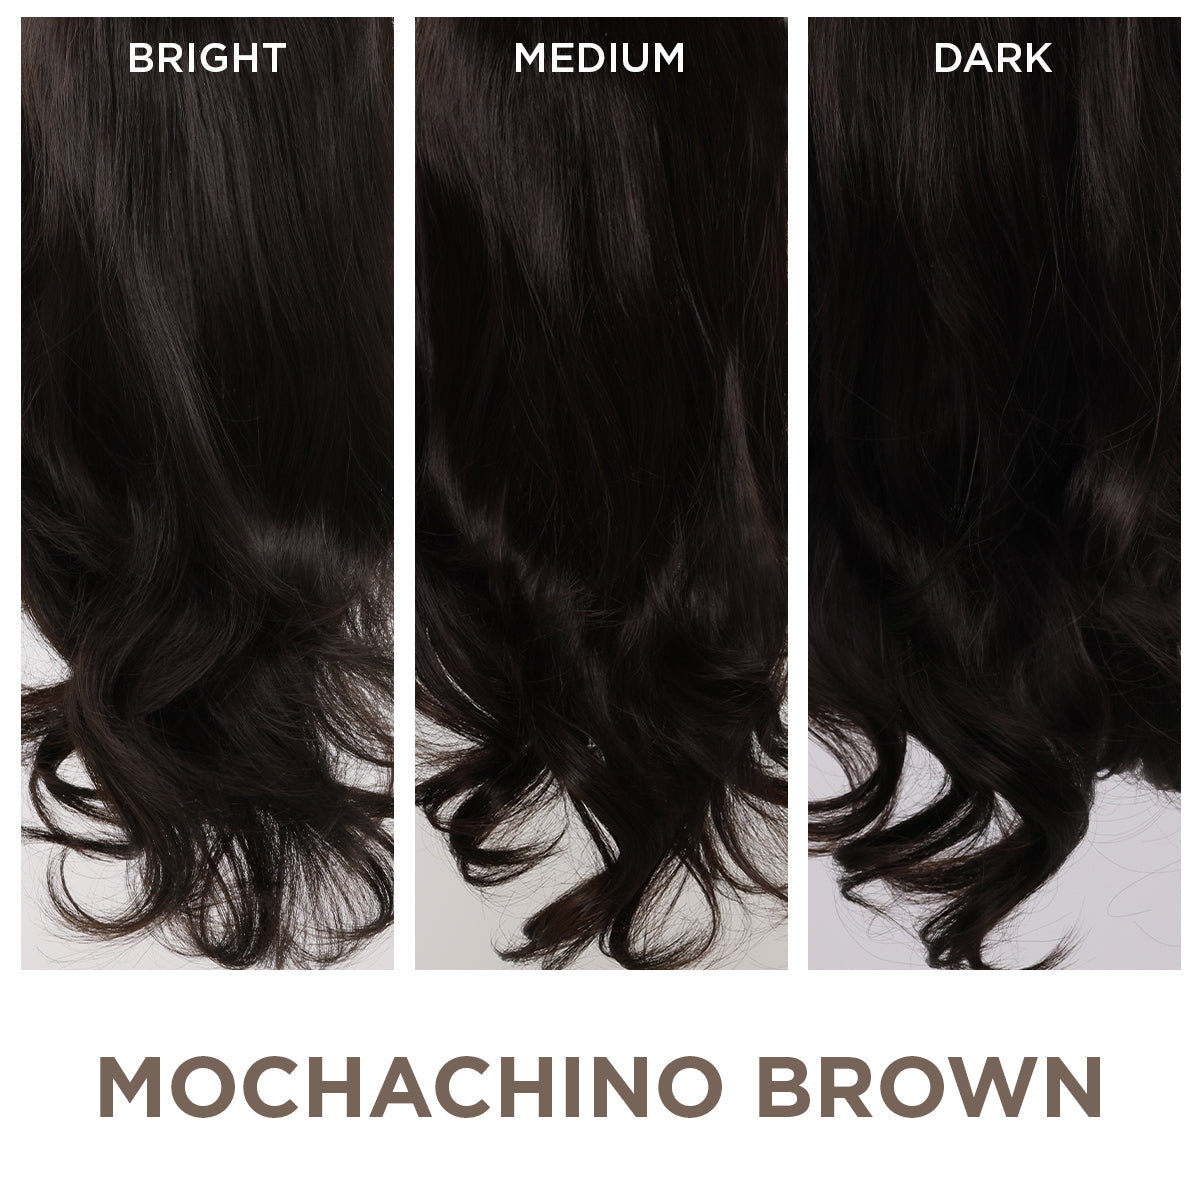 Mochachino Brown + 1 FREE HALO